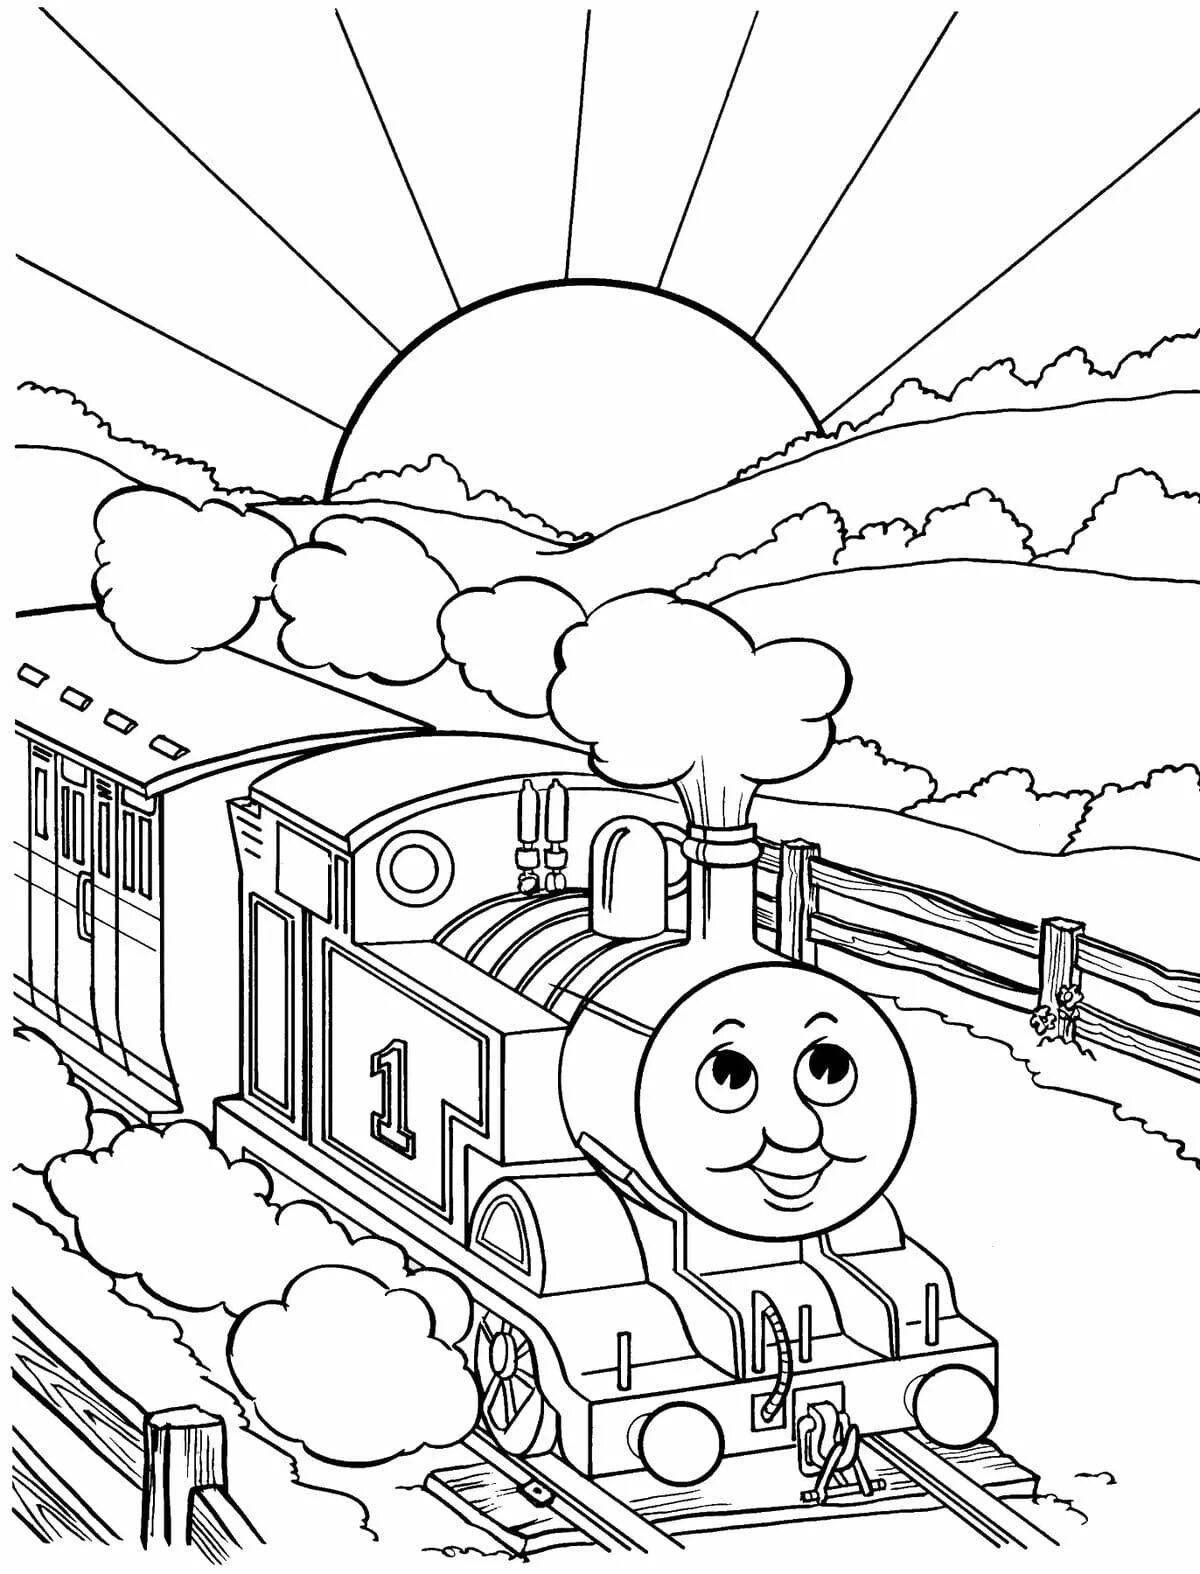 Radiant locomotives and trains